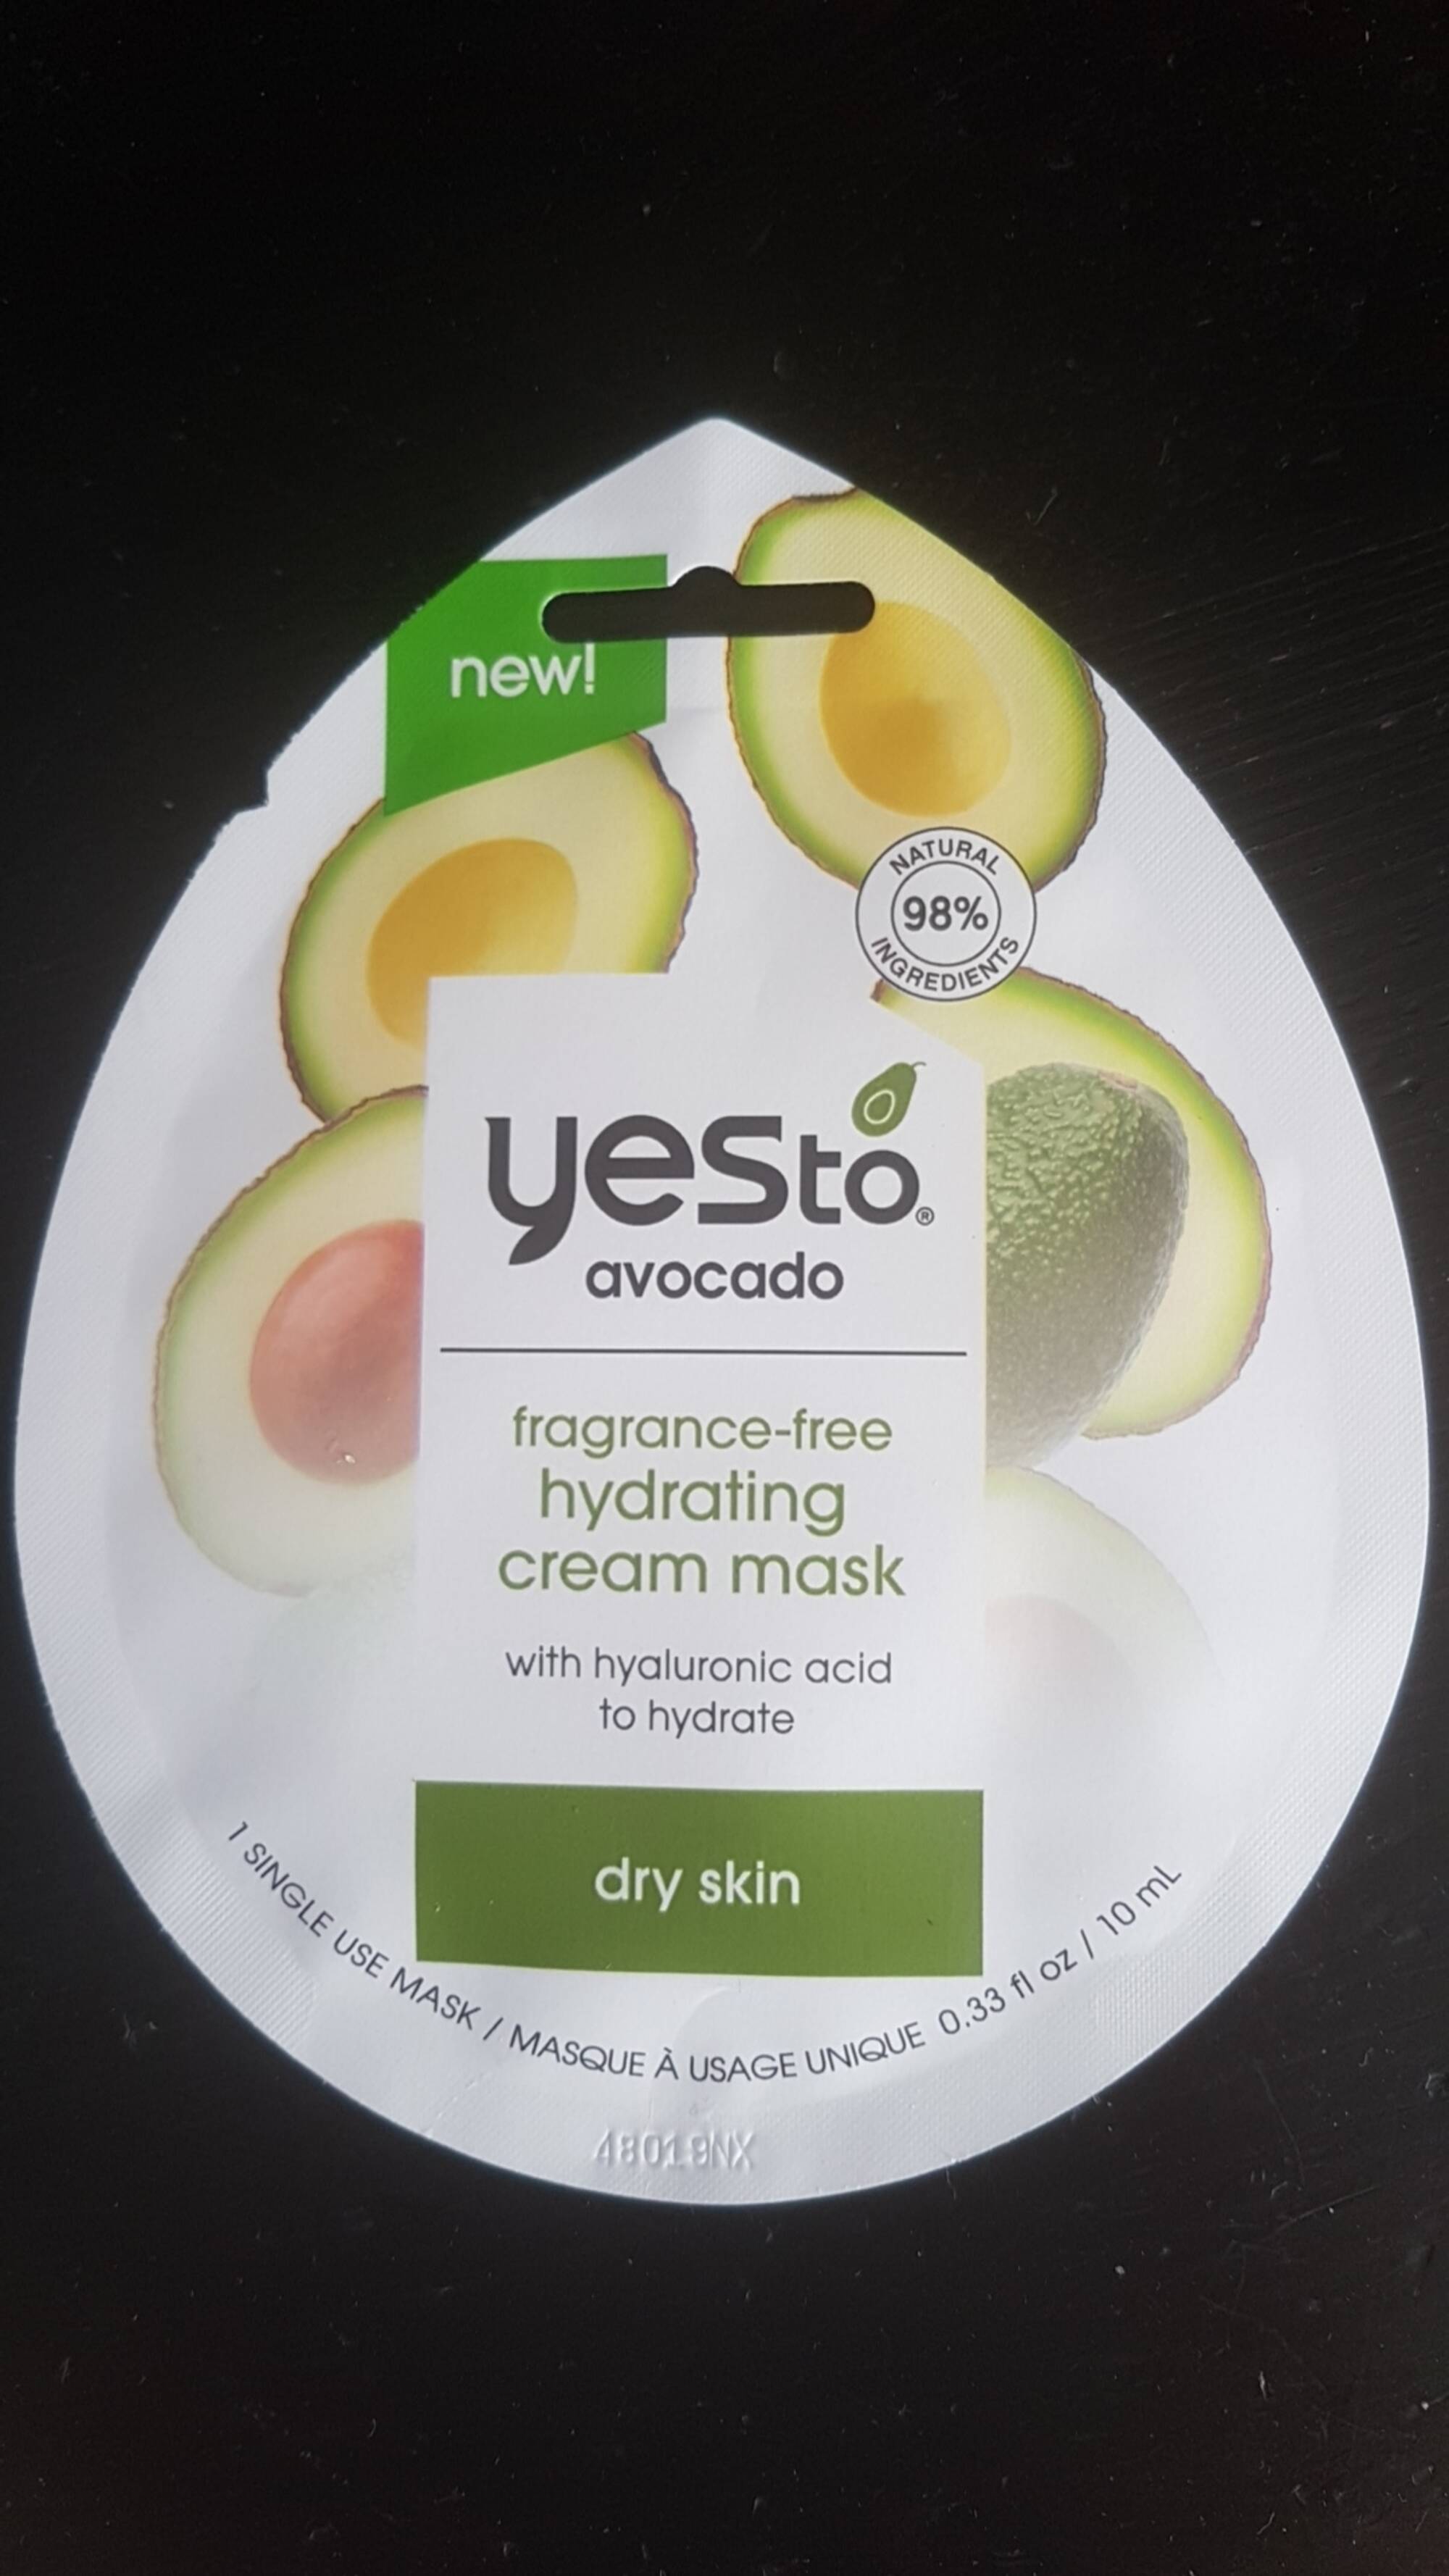 YES TO - Avocado - Fragrance-free hydrating cream mask